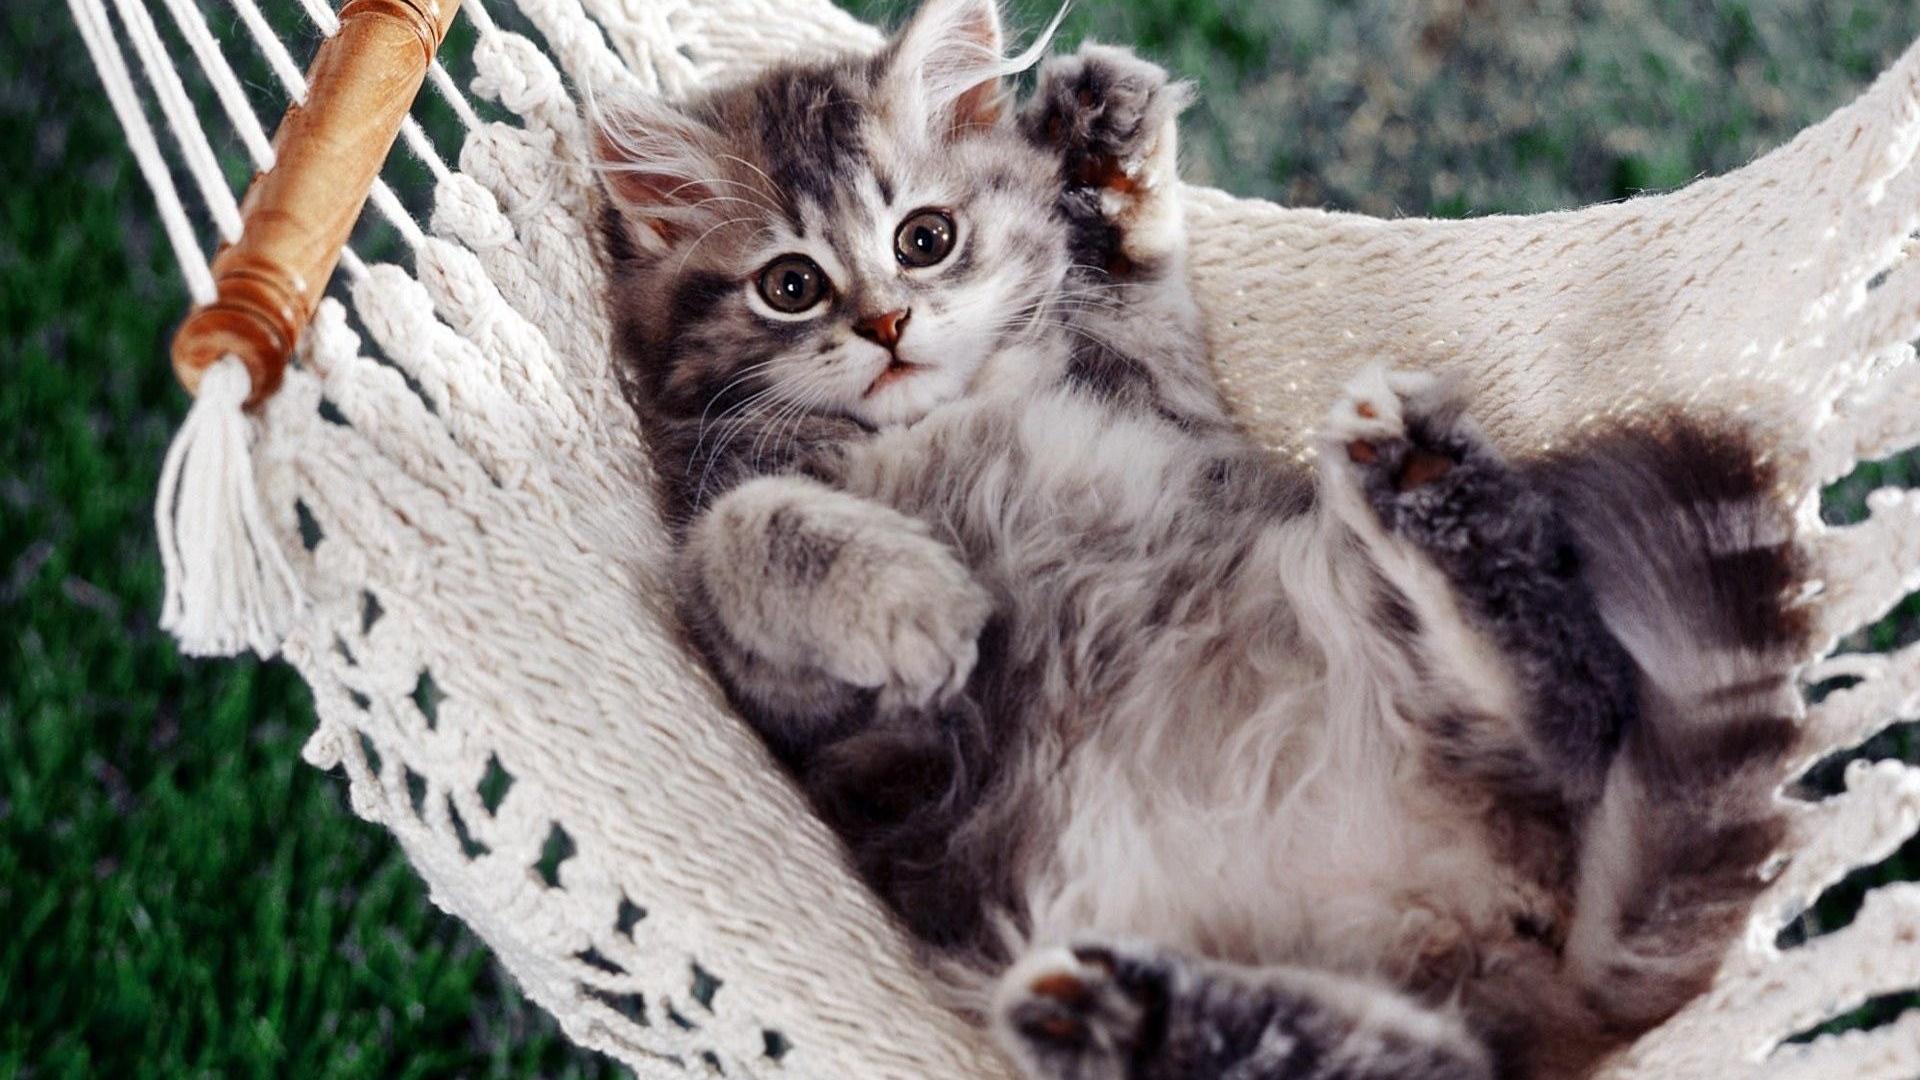 Kitty Cat Wallpaper - Kittens Wallpapers For Desktop - HD Wallpaper 